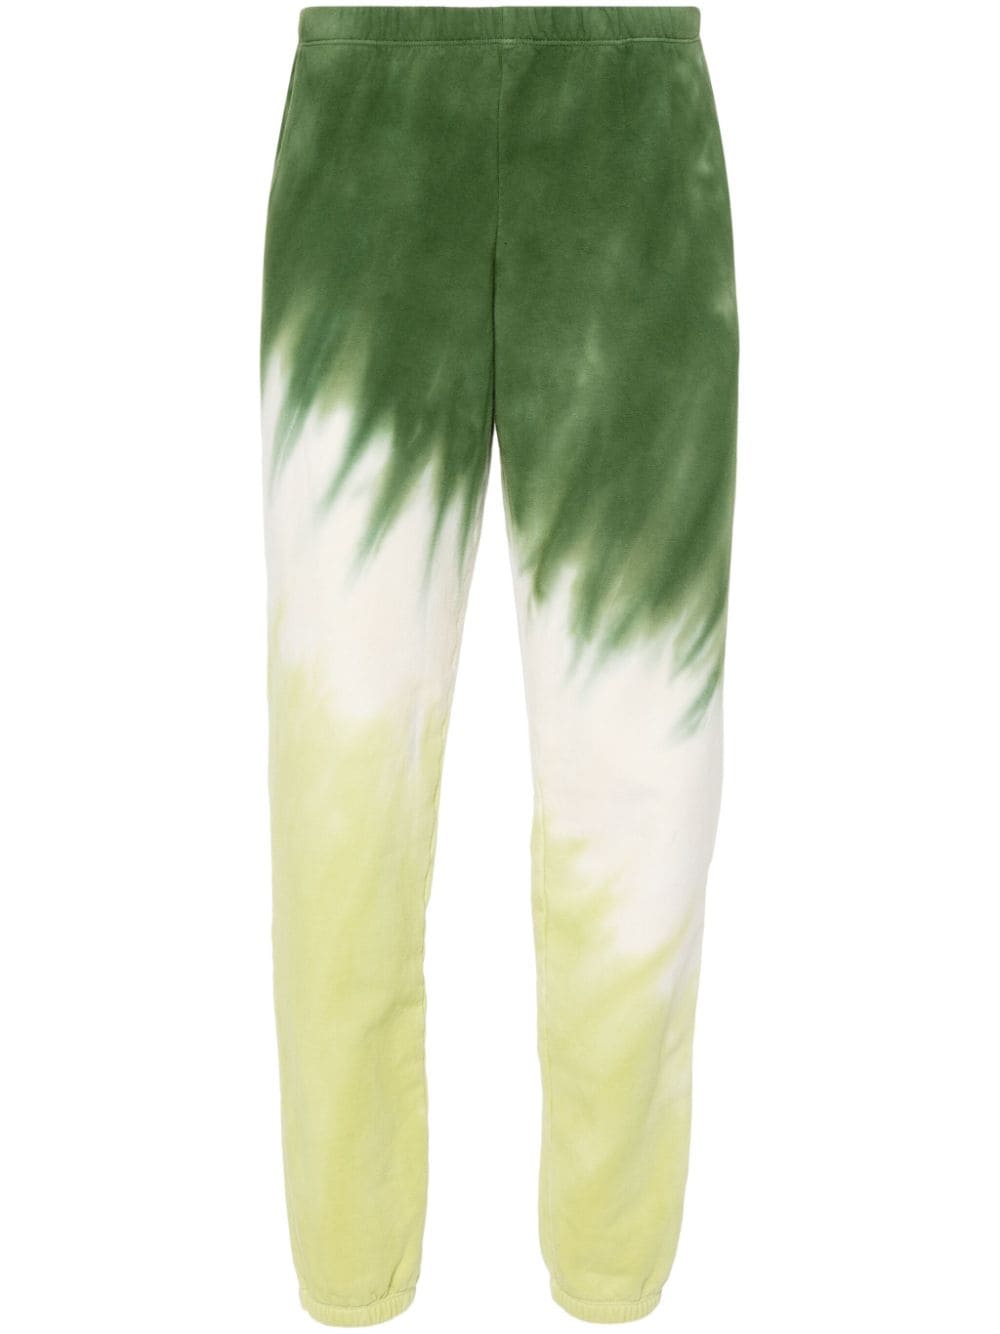 ELECTRIC & ROSE Siesta tie-dye track pants - Green von ELECTRIC & ROSE